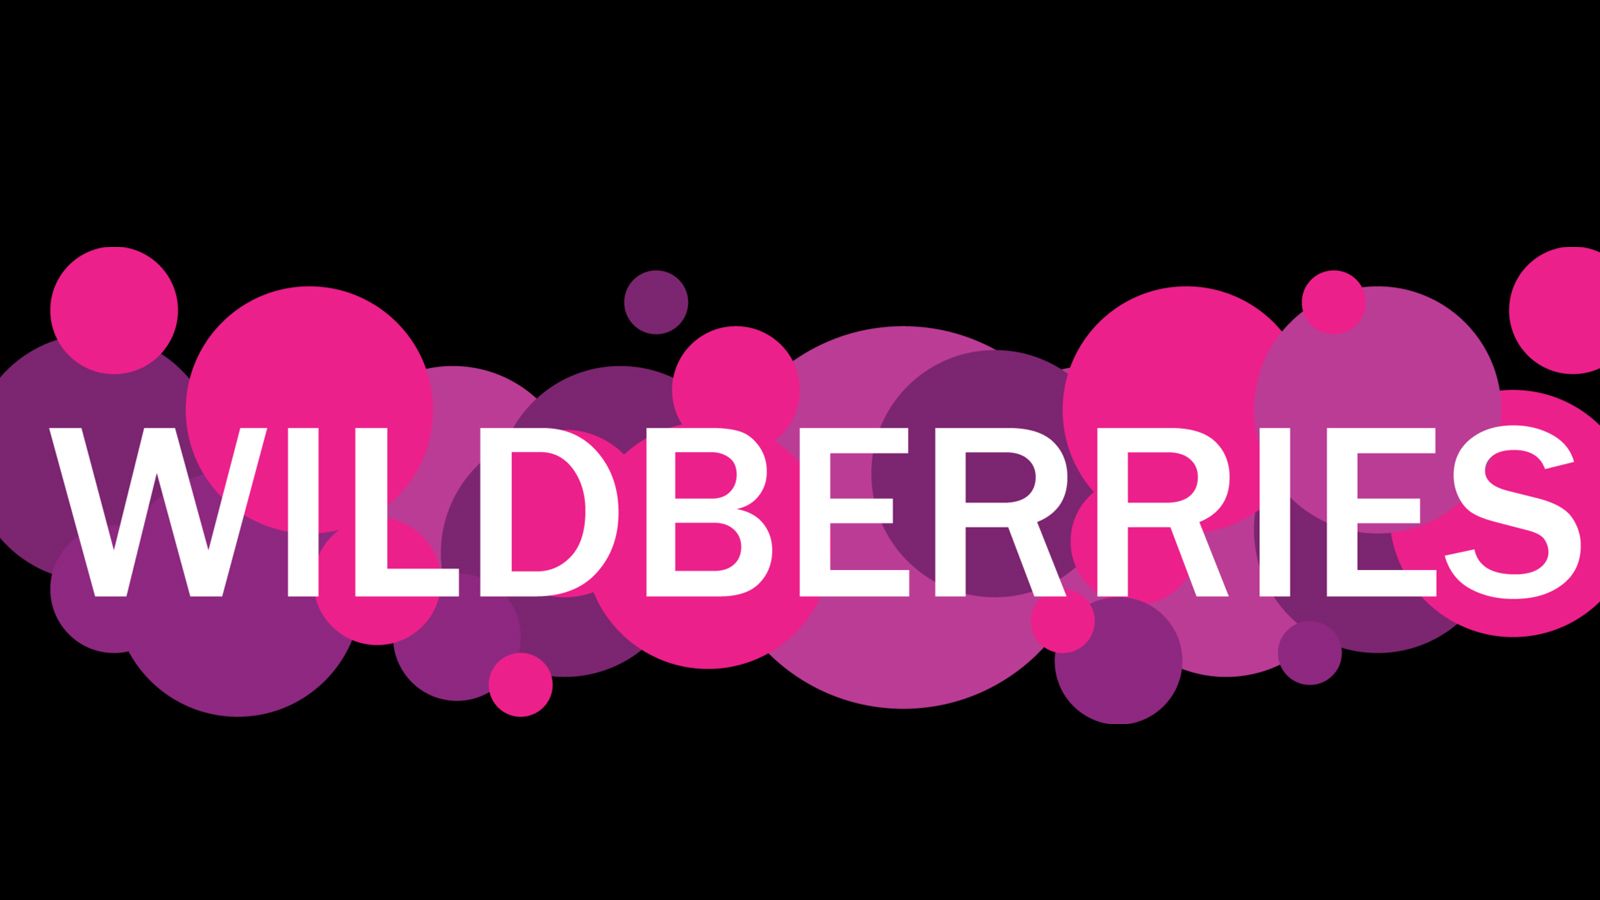 Вб валдберис. Вайлдберриз. Wildberries лого. Маркетплейс Wildberries. Wildberries фото логотипа.